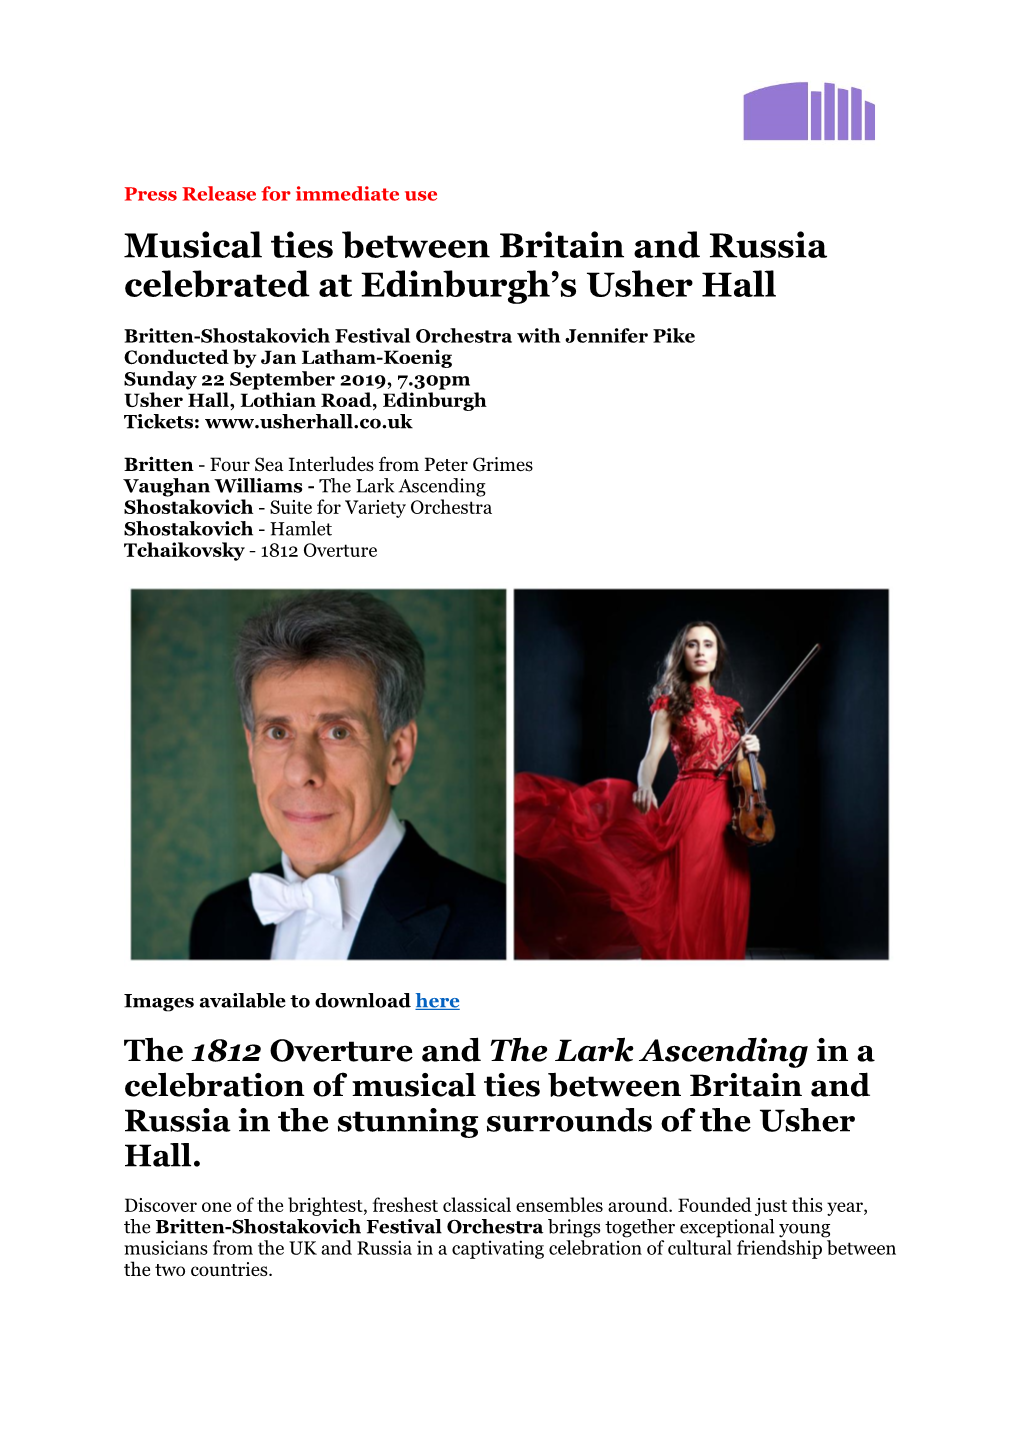 Musical Ties Between Britain and Russia Celebrated at Edinburgh's